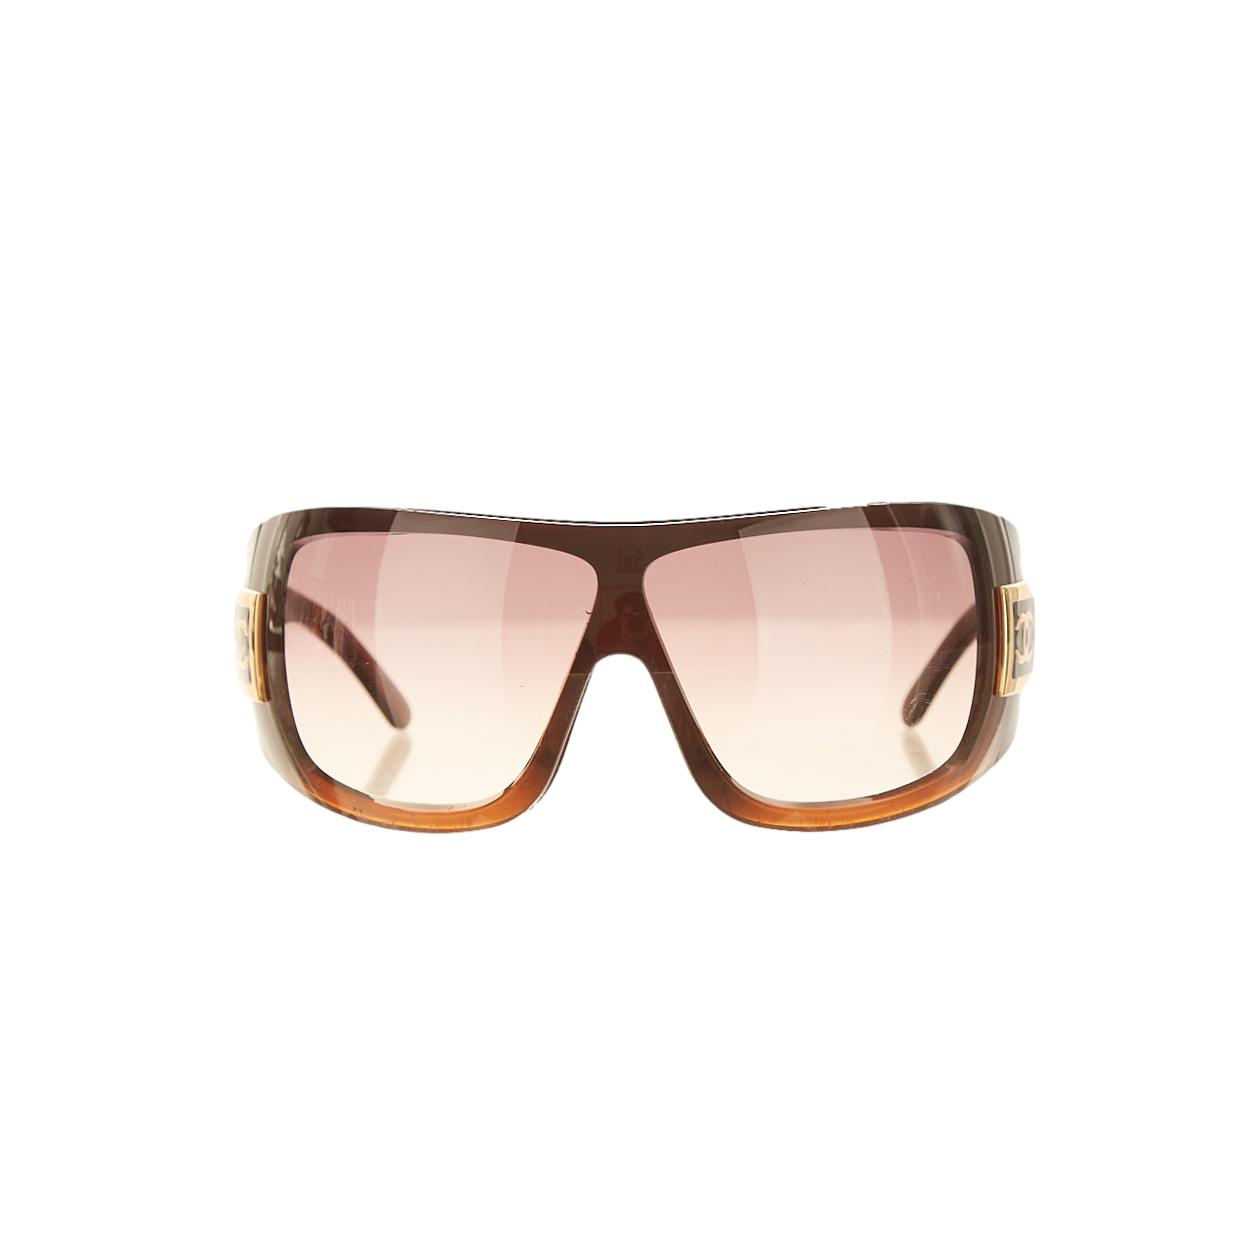 Chanel Brown Oversized Shield Sunglasses